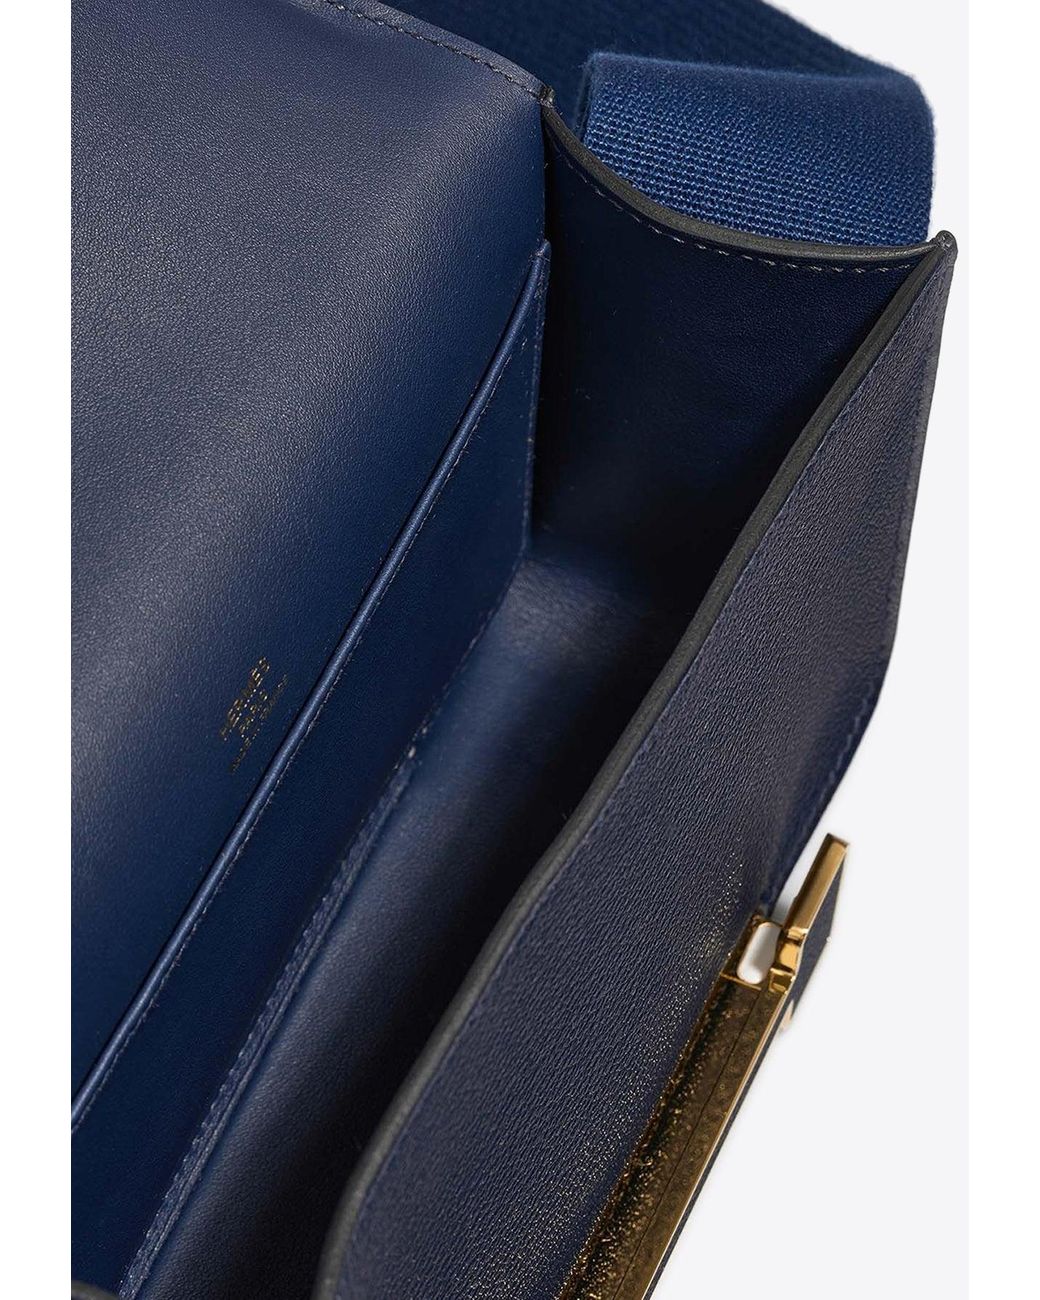 Hermès Geta Shoulder Bag In Nata Chèvre Mysore With Gold Hardware